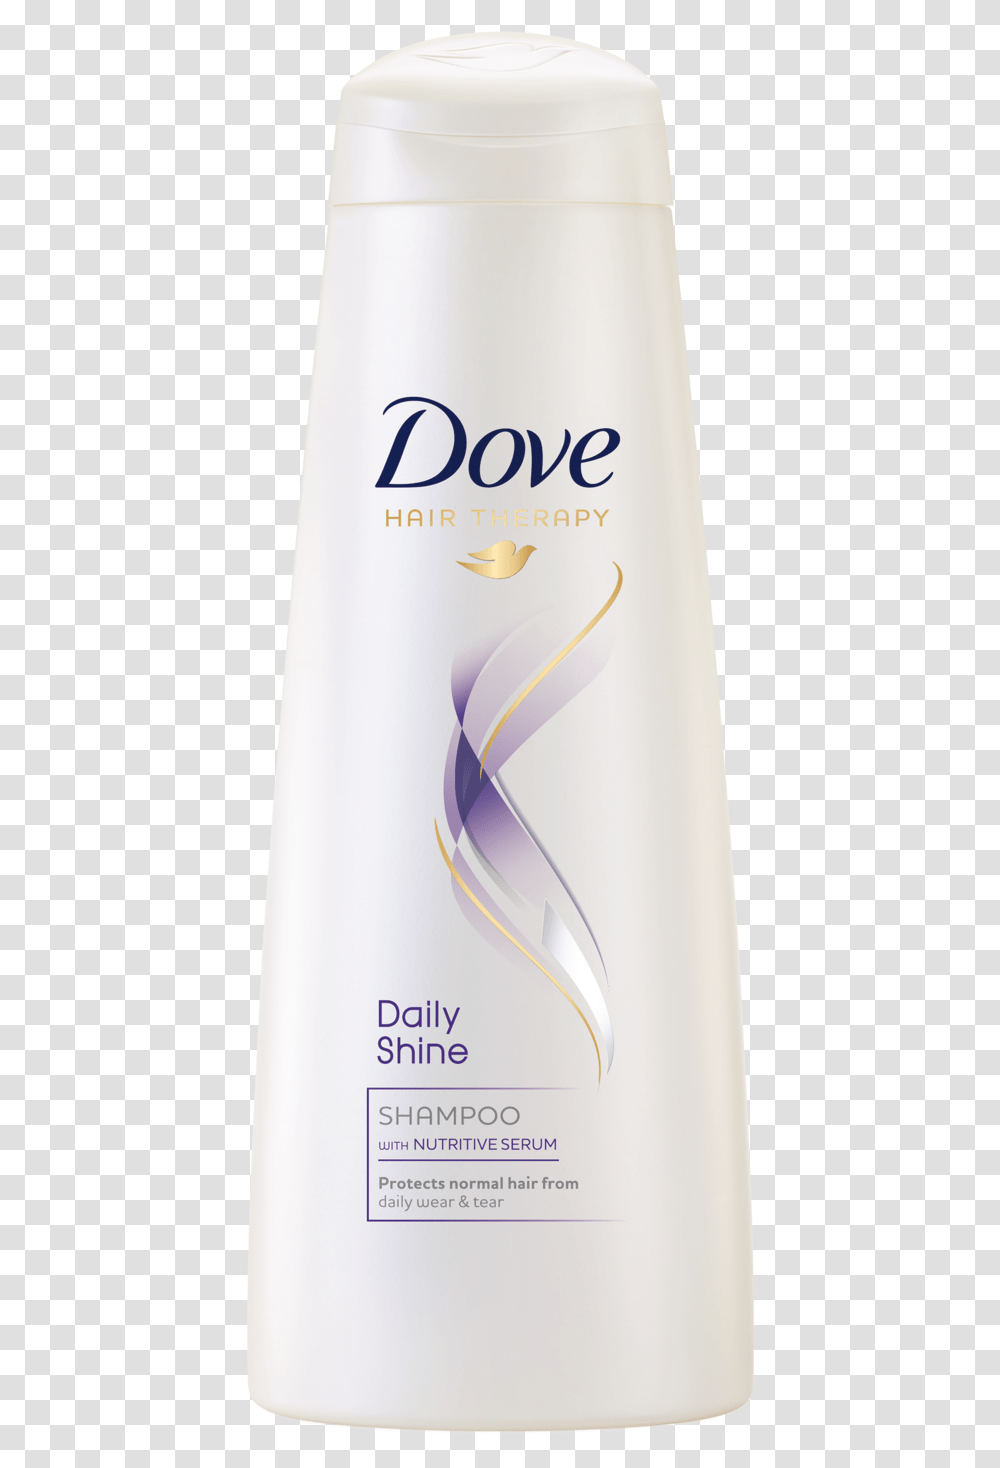 Shampoo Image Background Dove Shampoo Hair Fall Rescue, Bottle, Shaker, Aluminium, Can Transparent Png